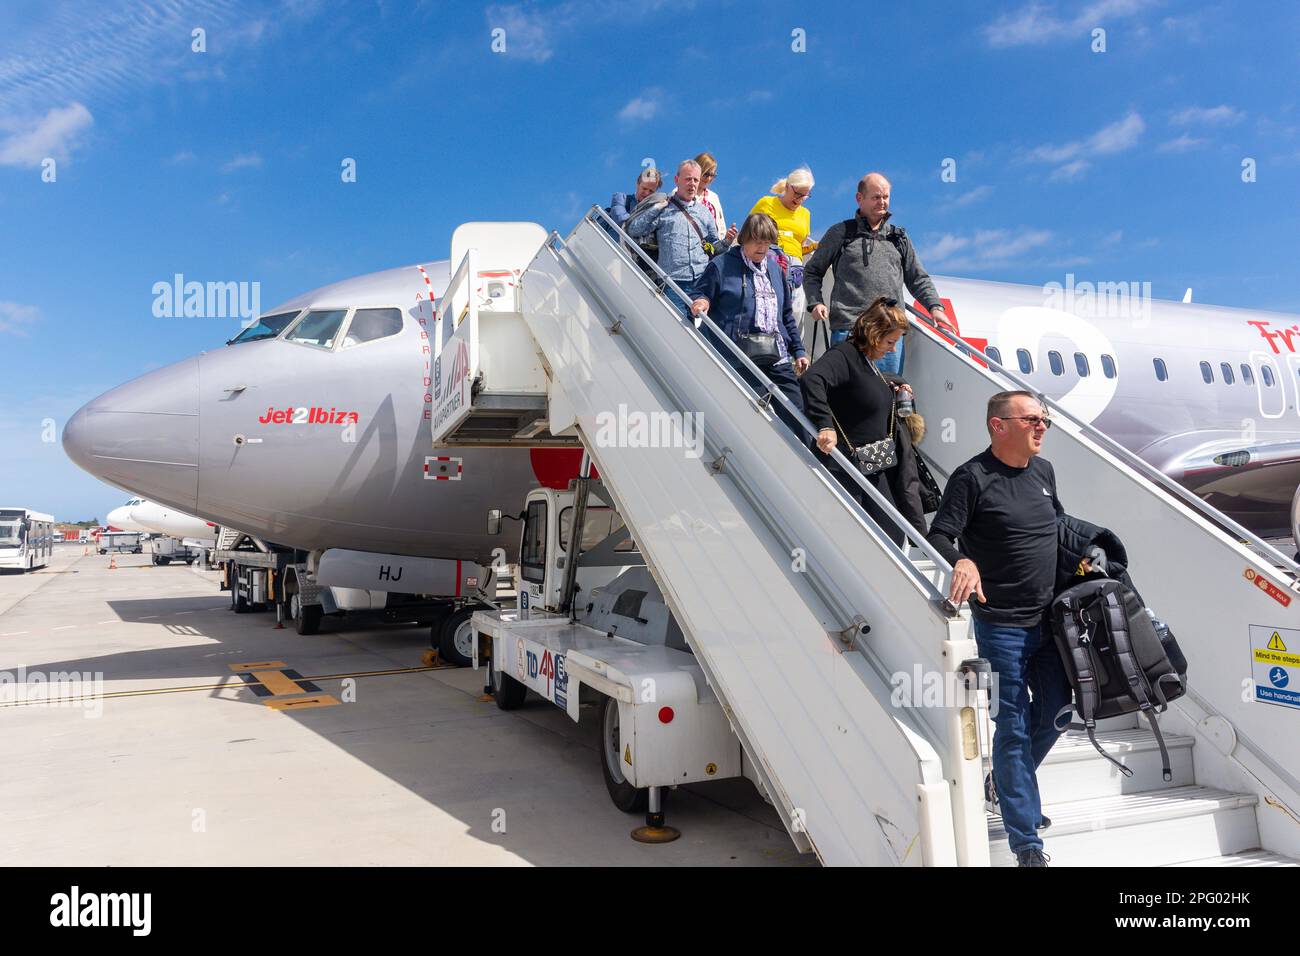 Passengers leaving Jet 2 Boeing 737-300 aircraft, Tenerife South Airport (Aeropuerto de Tenerife Sur), Tenerife, Canary Islands, Kingdom of Spain Stock Photo